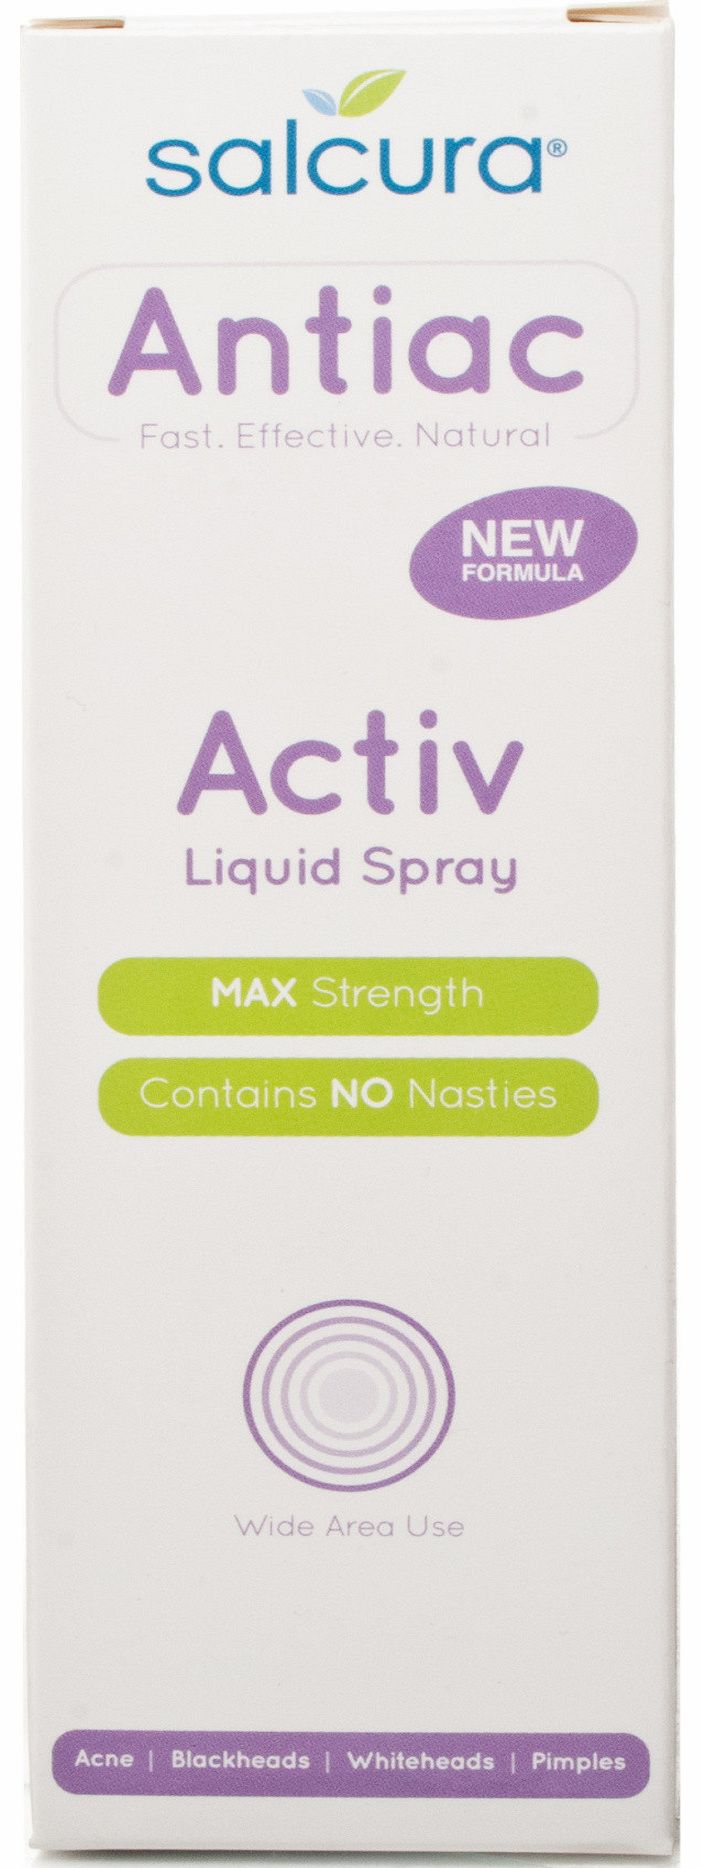 Antiac Activ Acne Clearing Spray